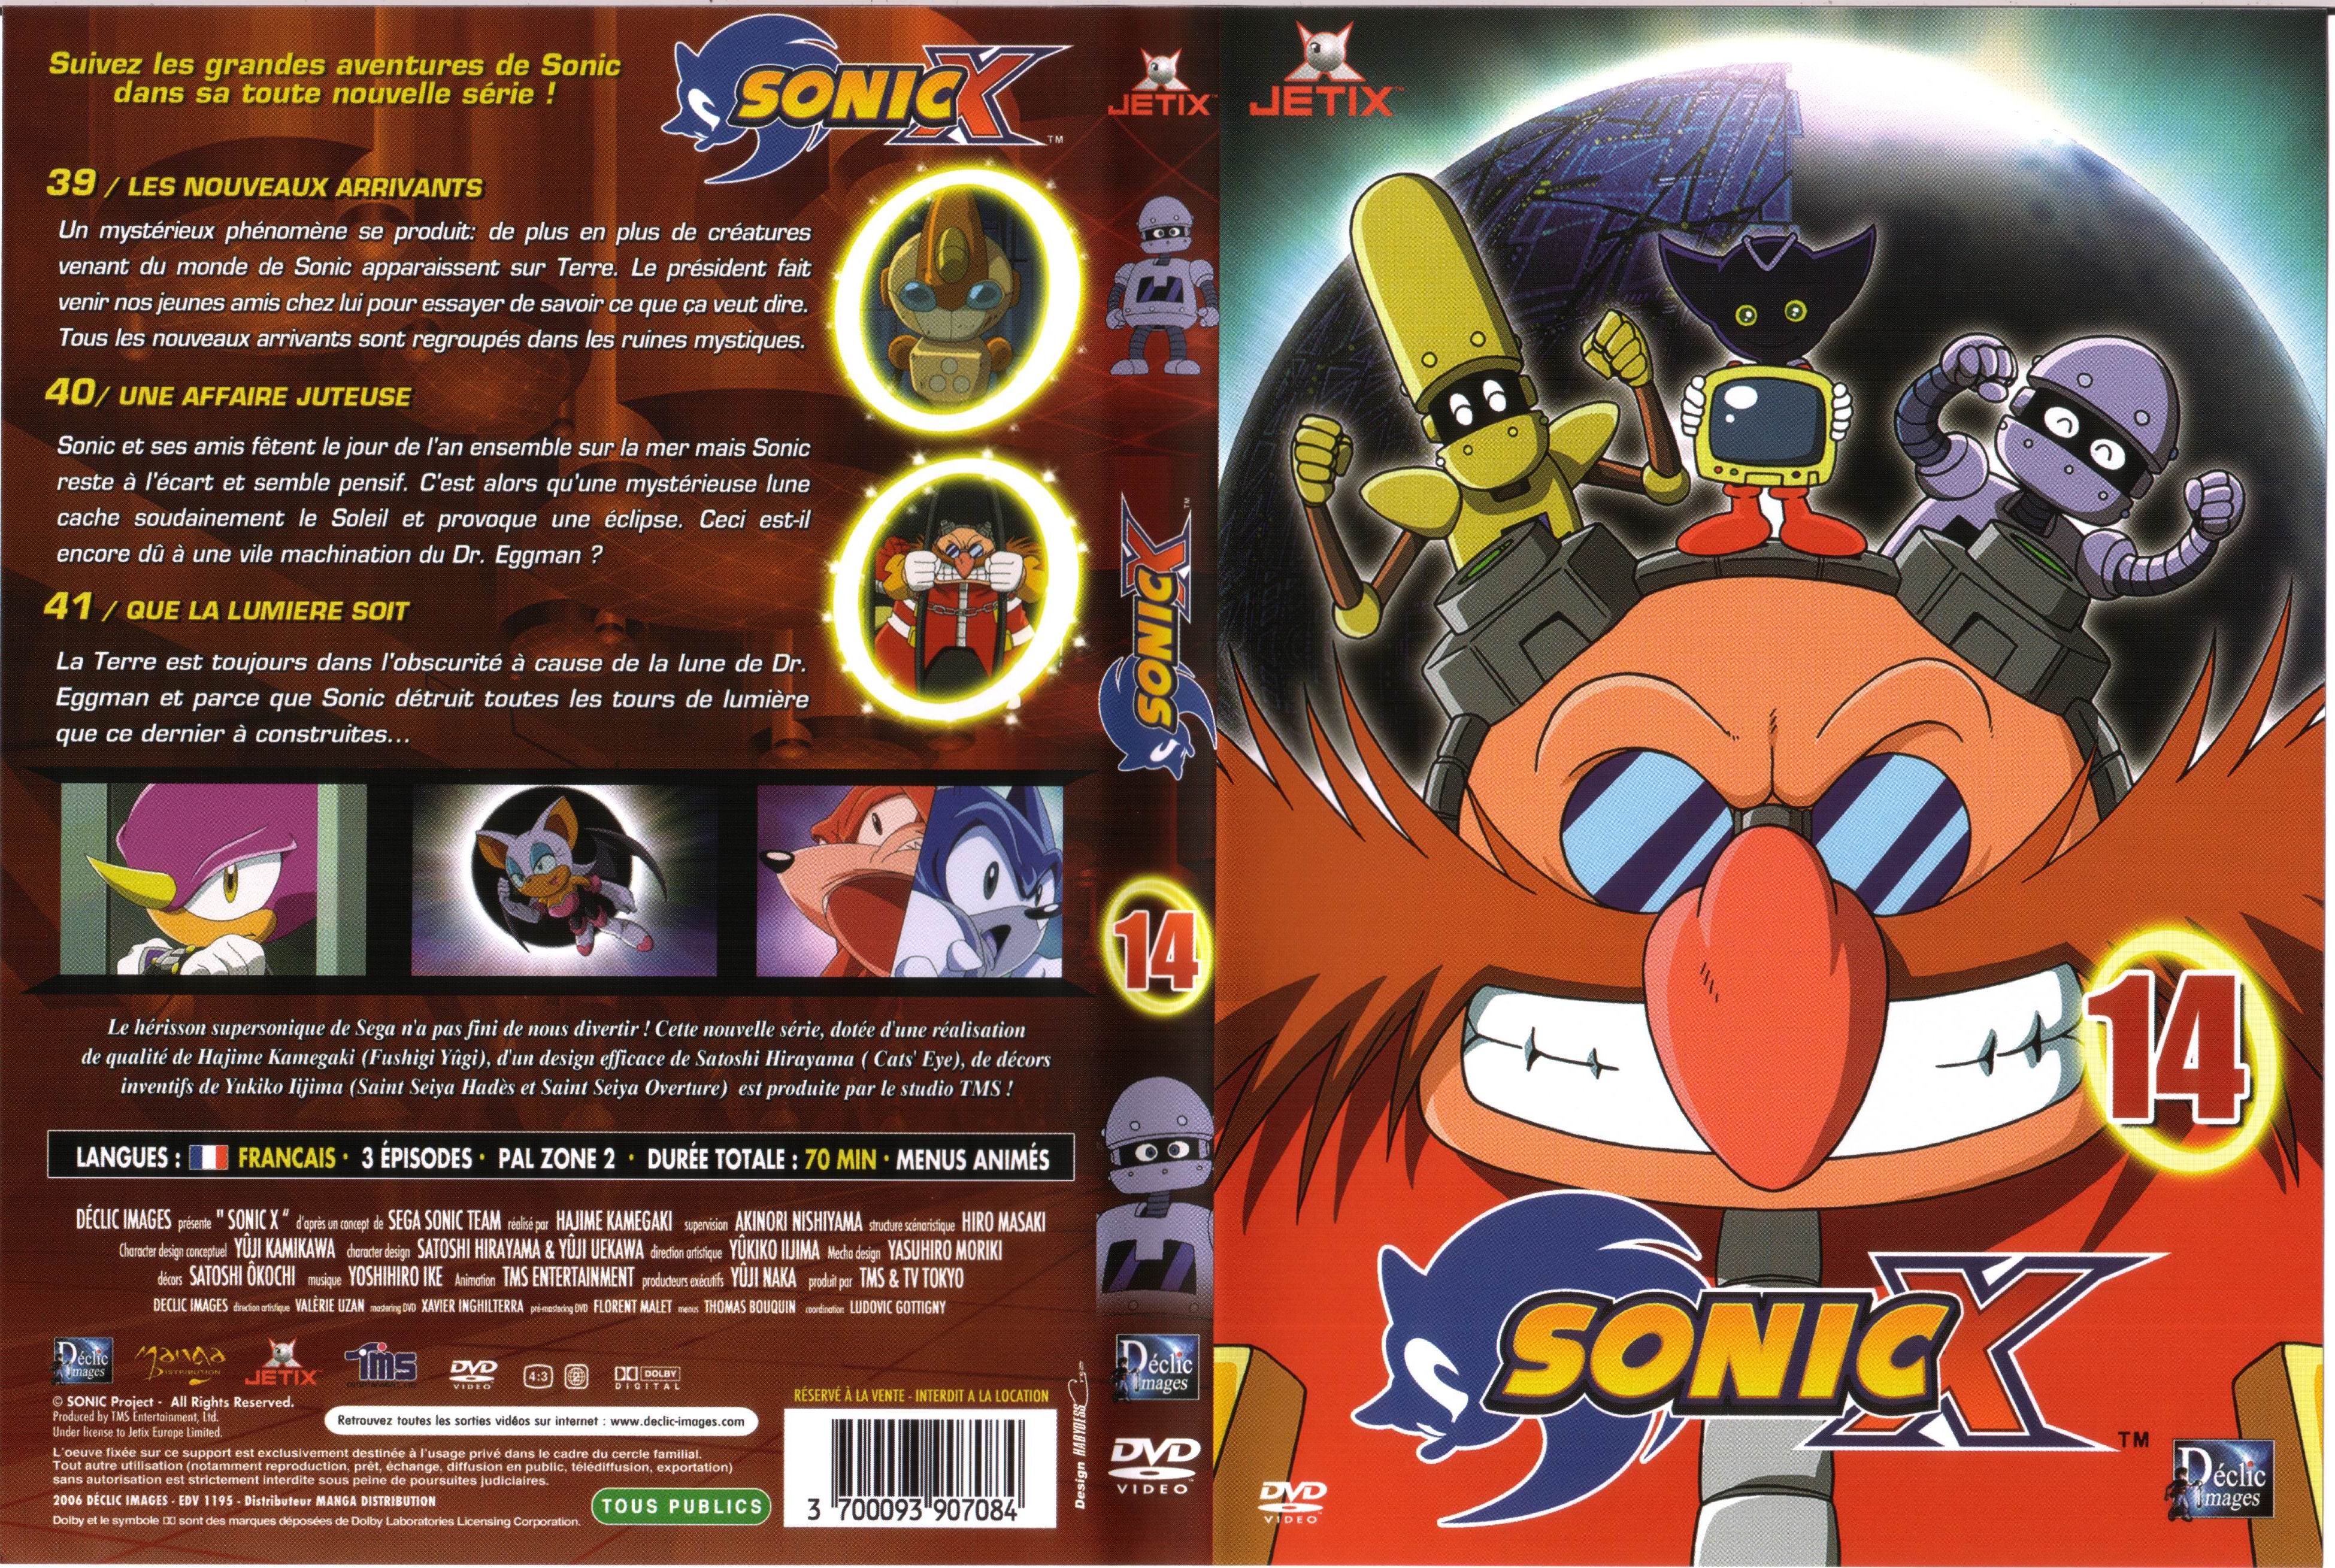 Jaquette DVD Sonic X vol 14